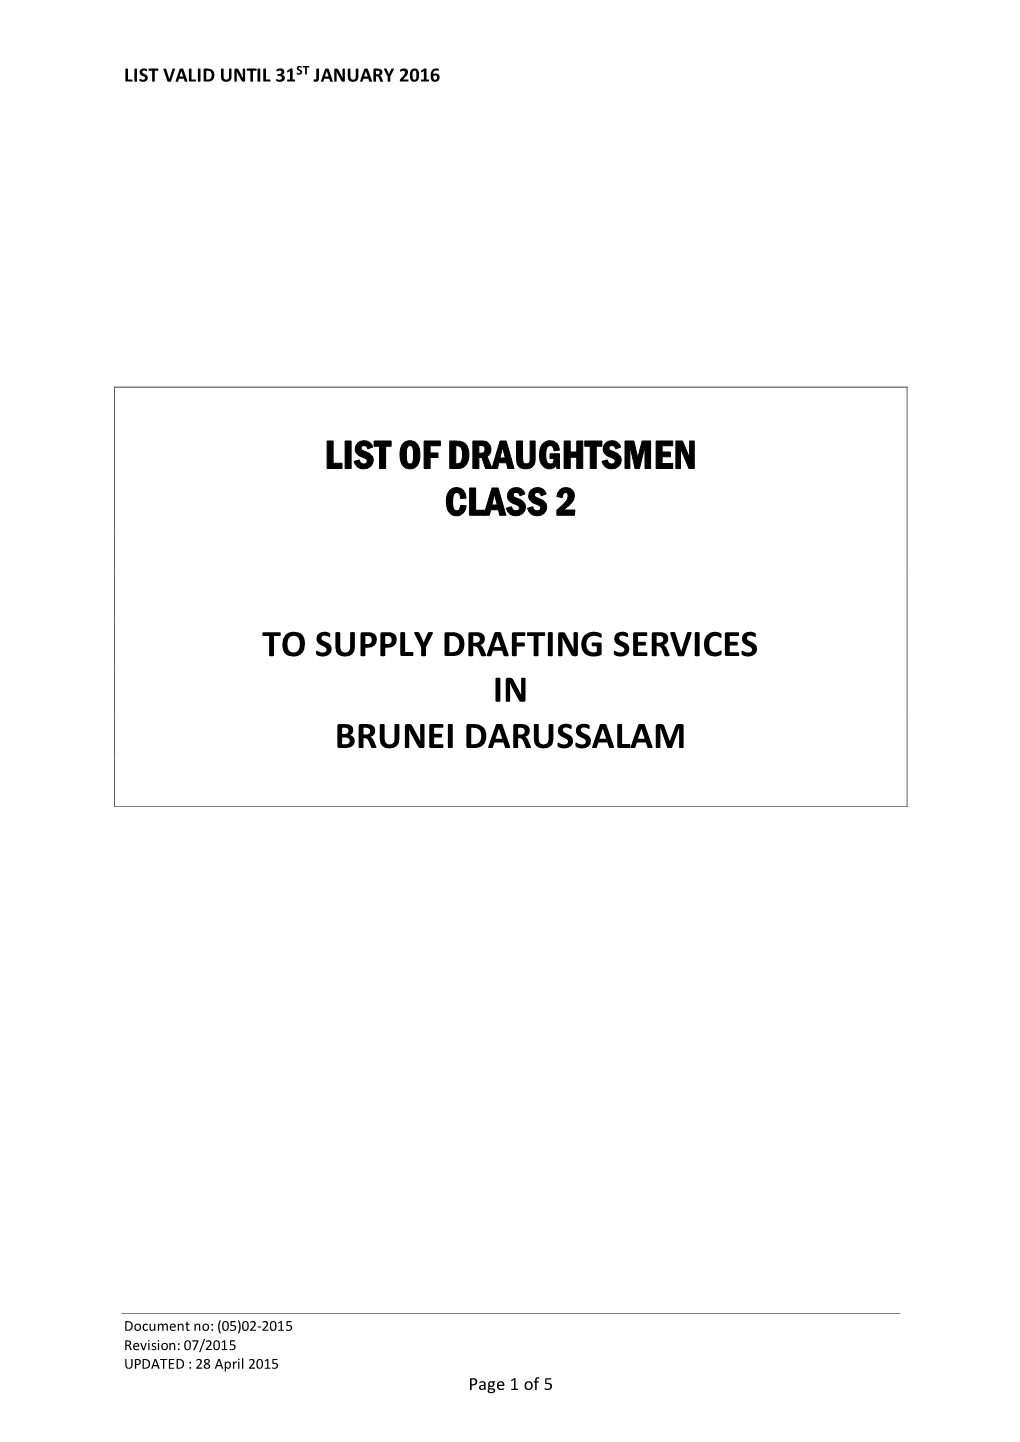 Draughtsman Class 2